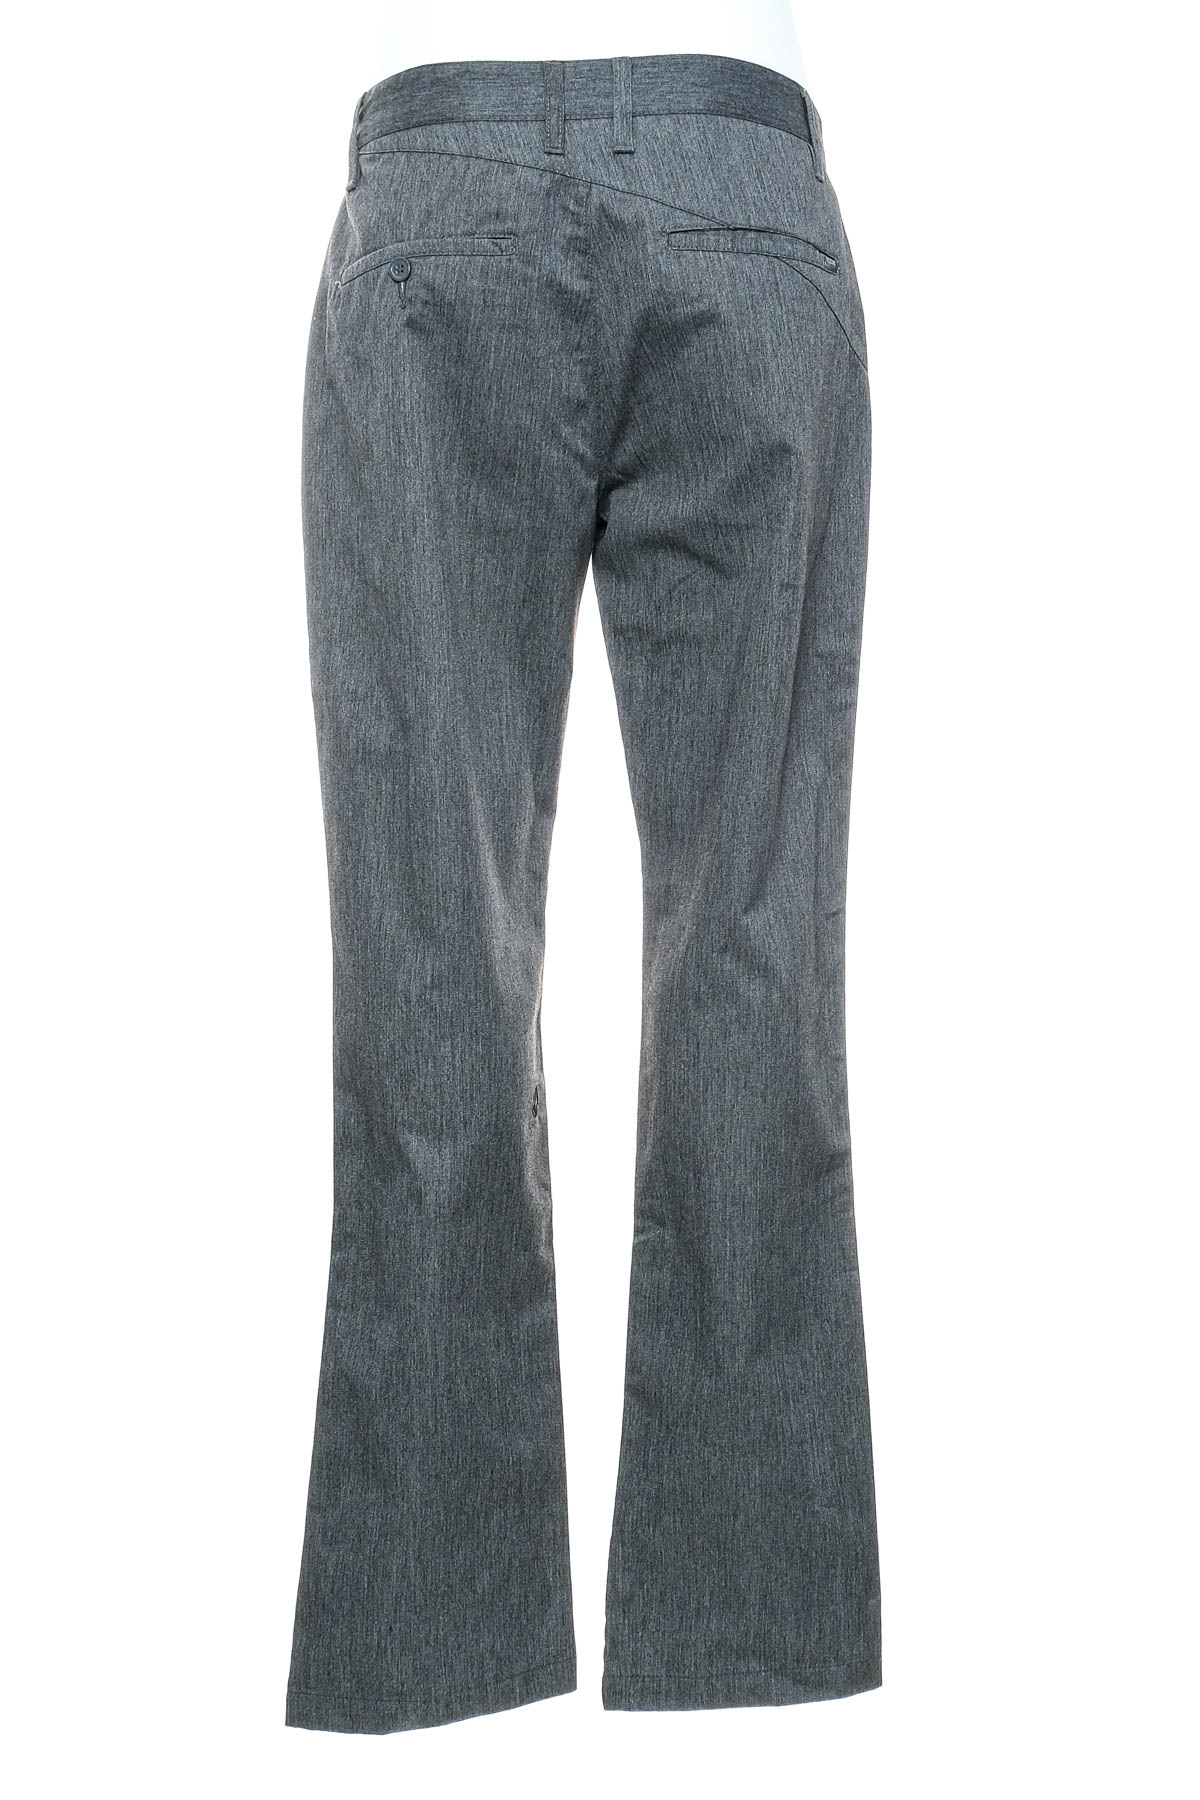 Pantalon pentru bărbați - Volcom - 1